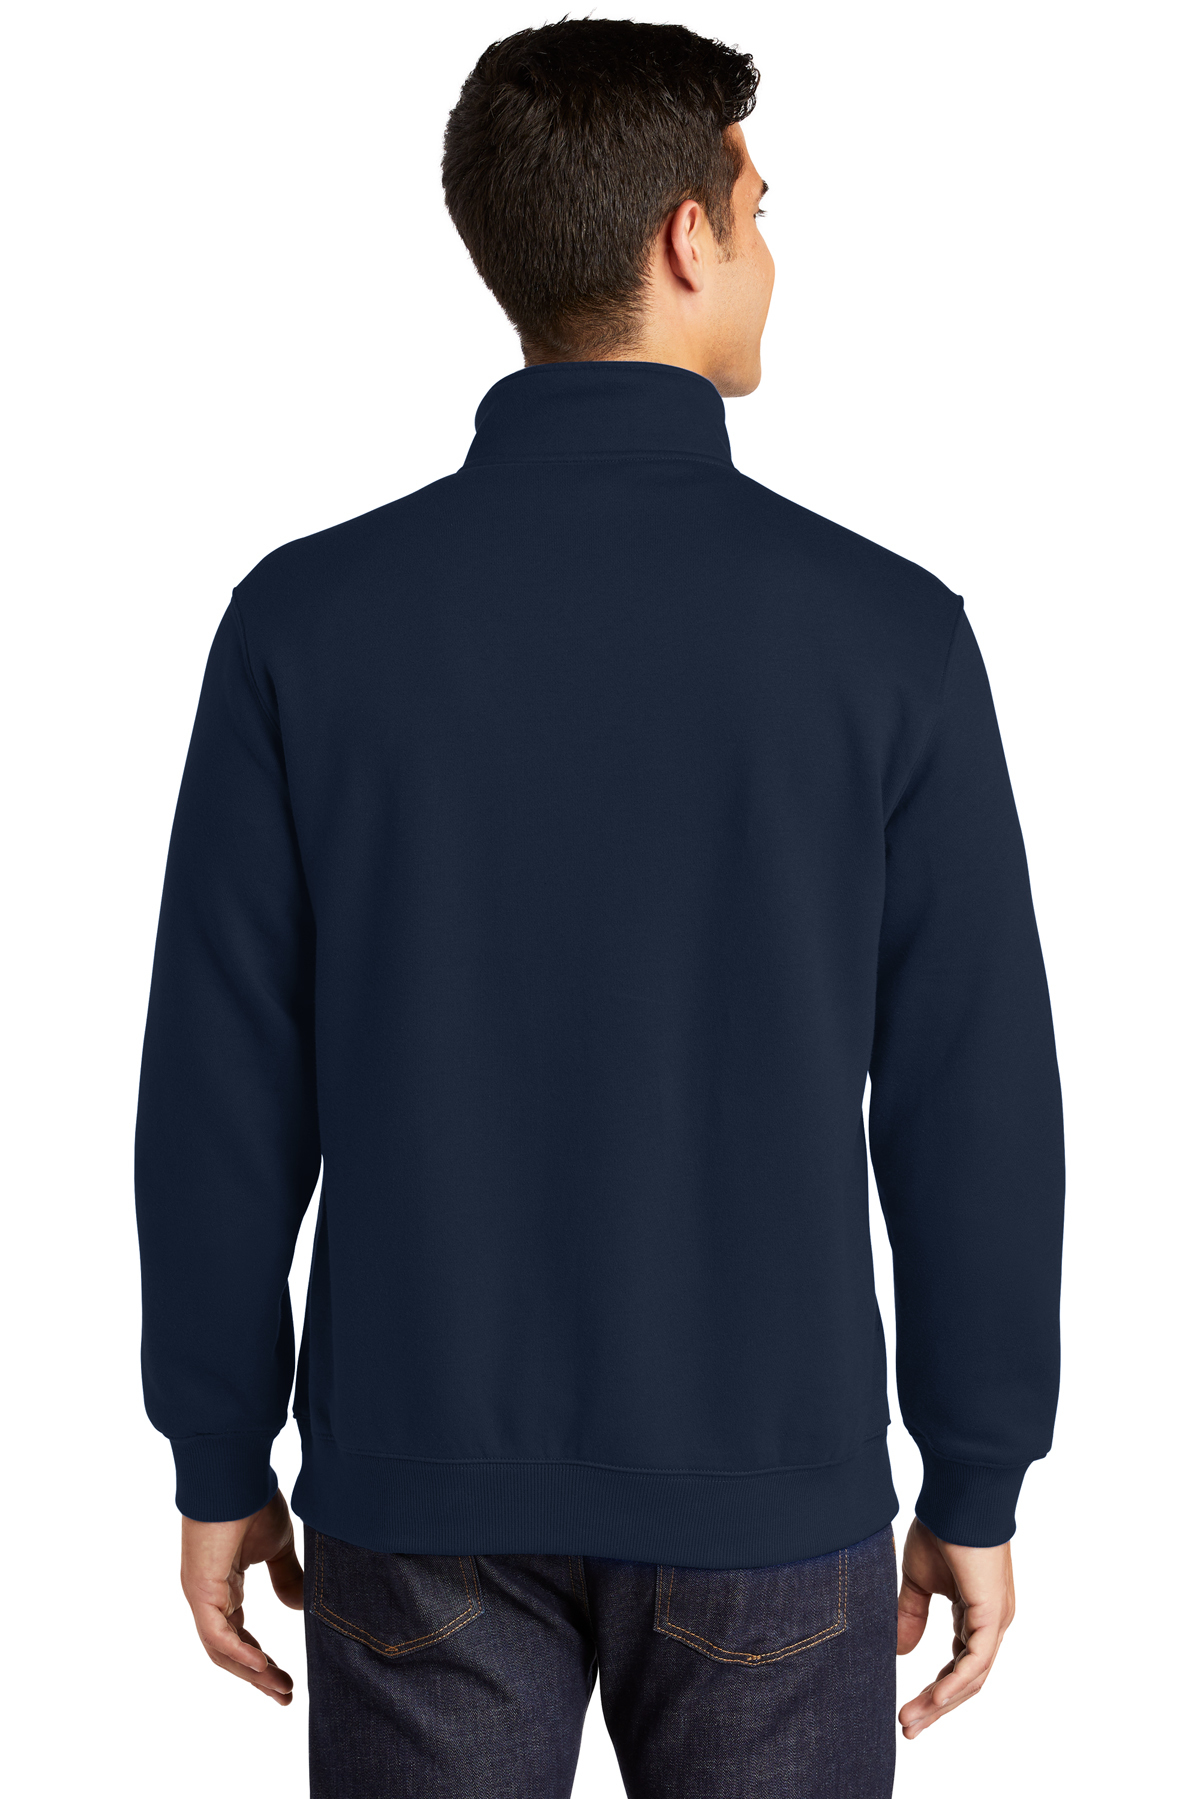 Gamma Alpha Omega – 1/4 Zip Sweatshirt, Embroidered – ST253 Sport